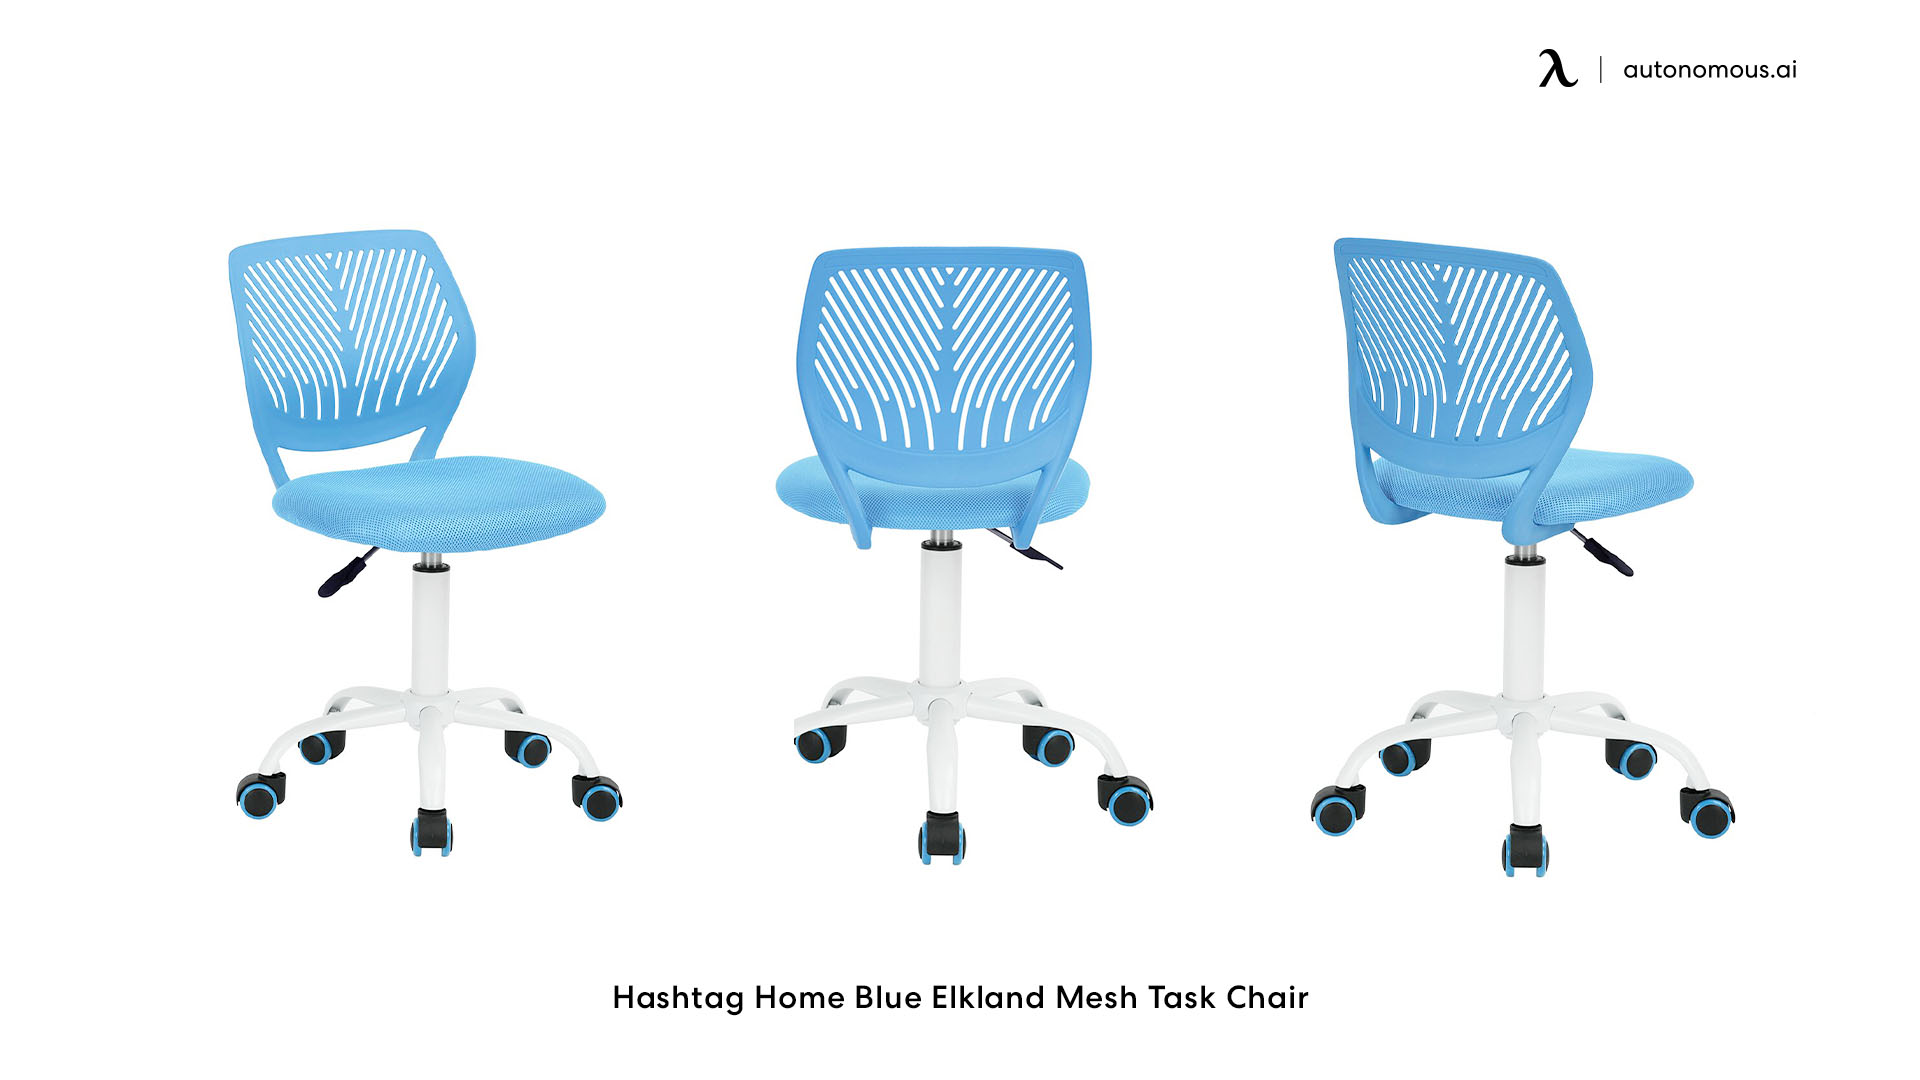 Elkland Mesh Task Chair from WayFair